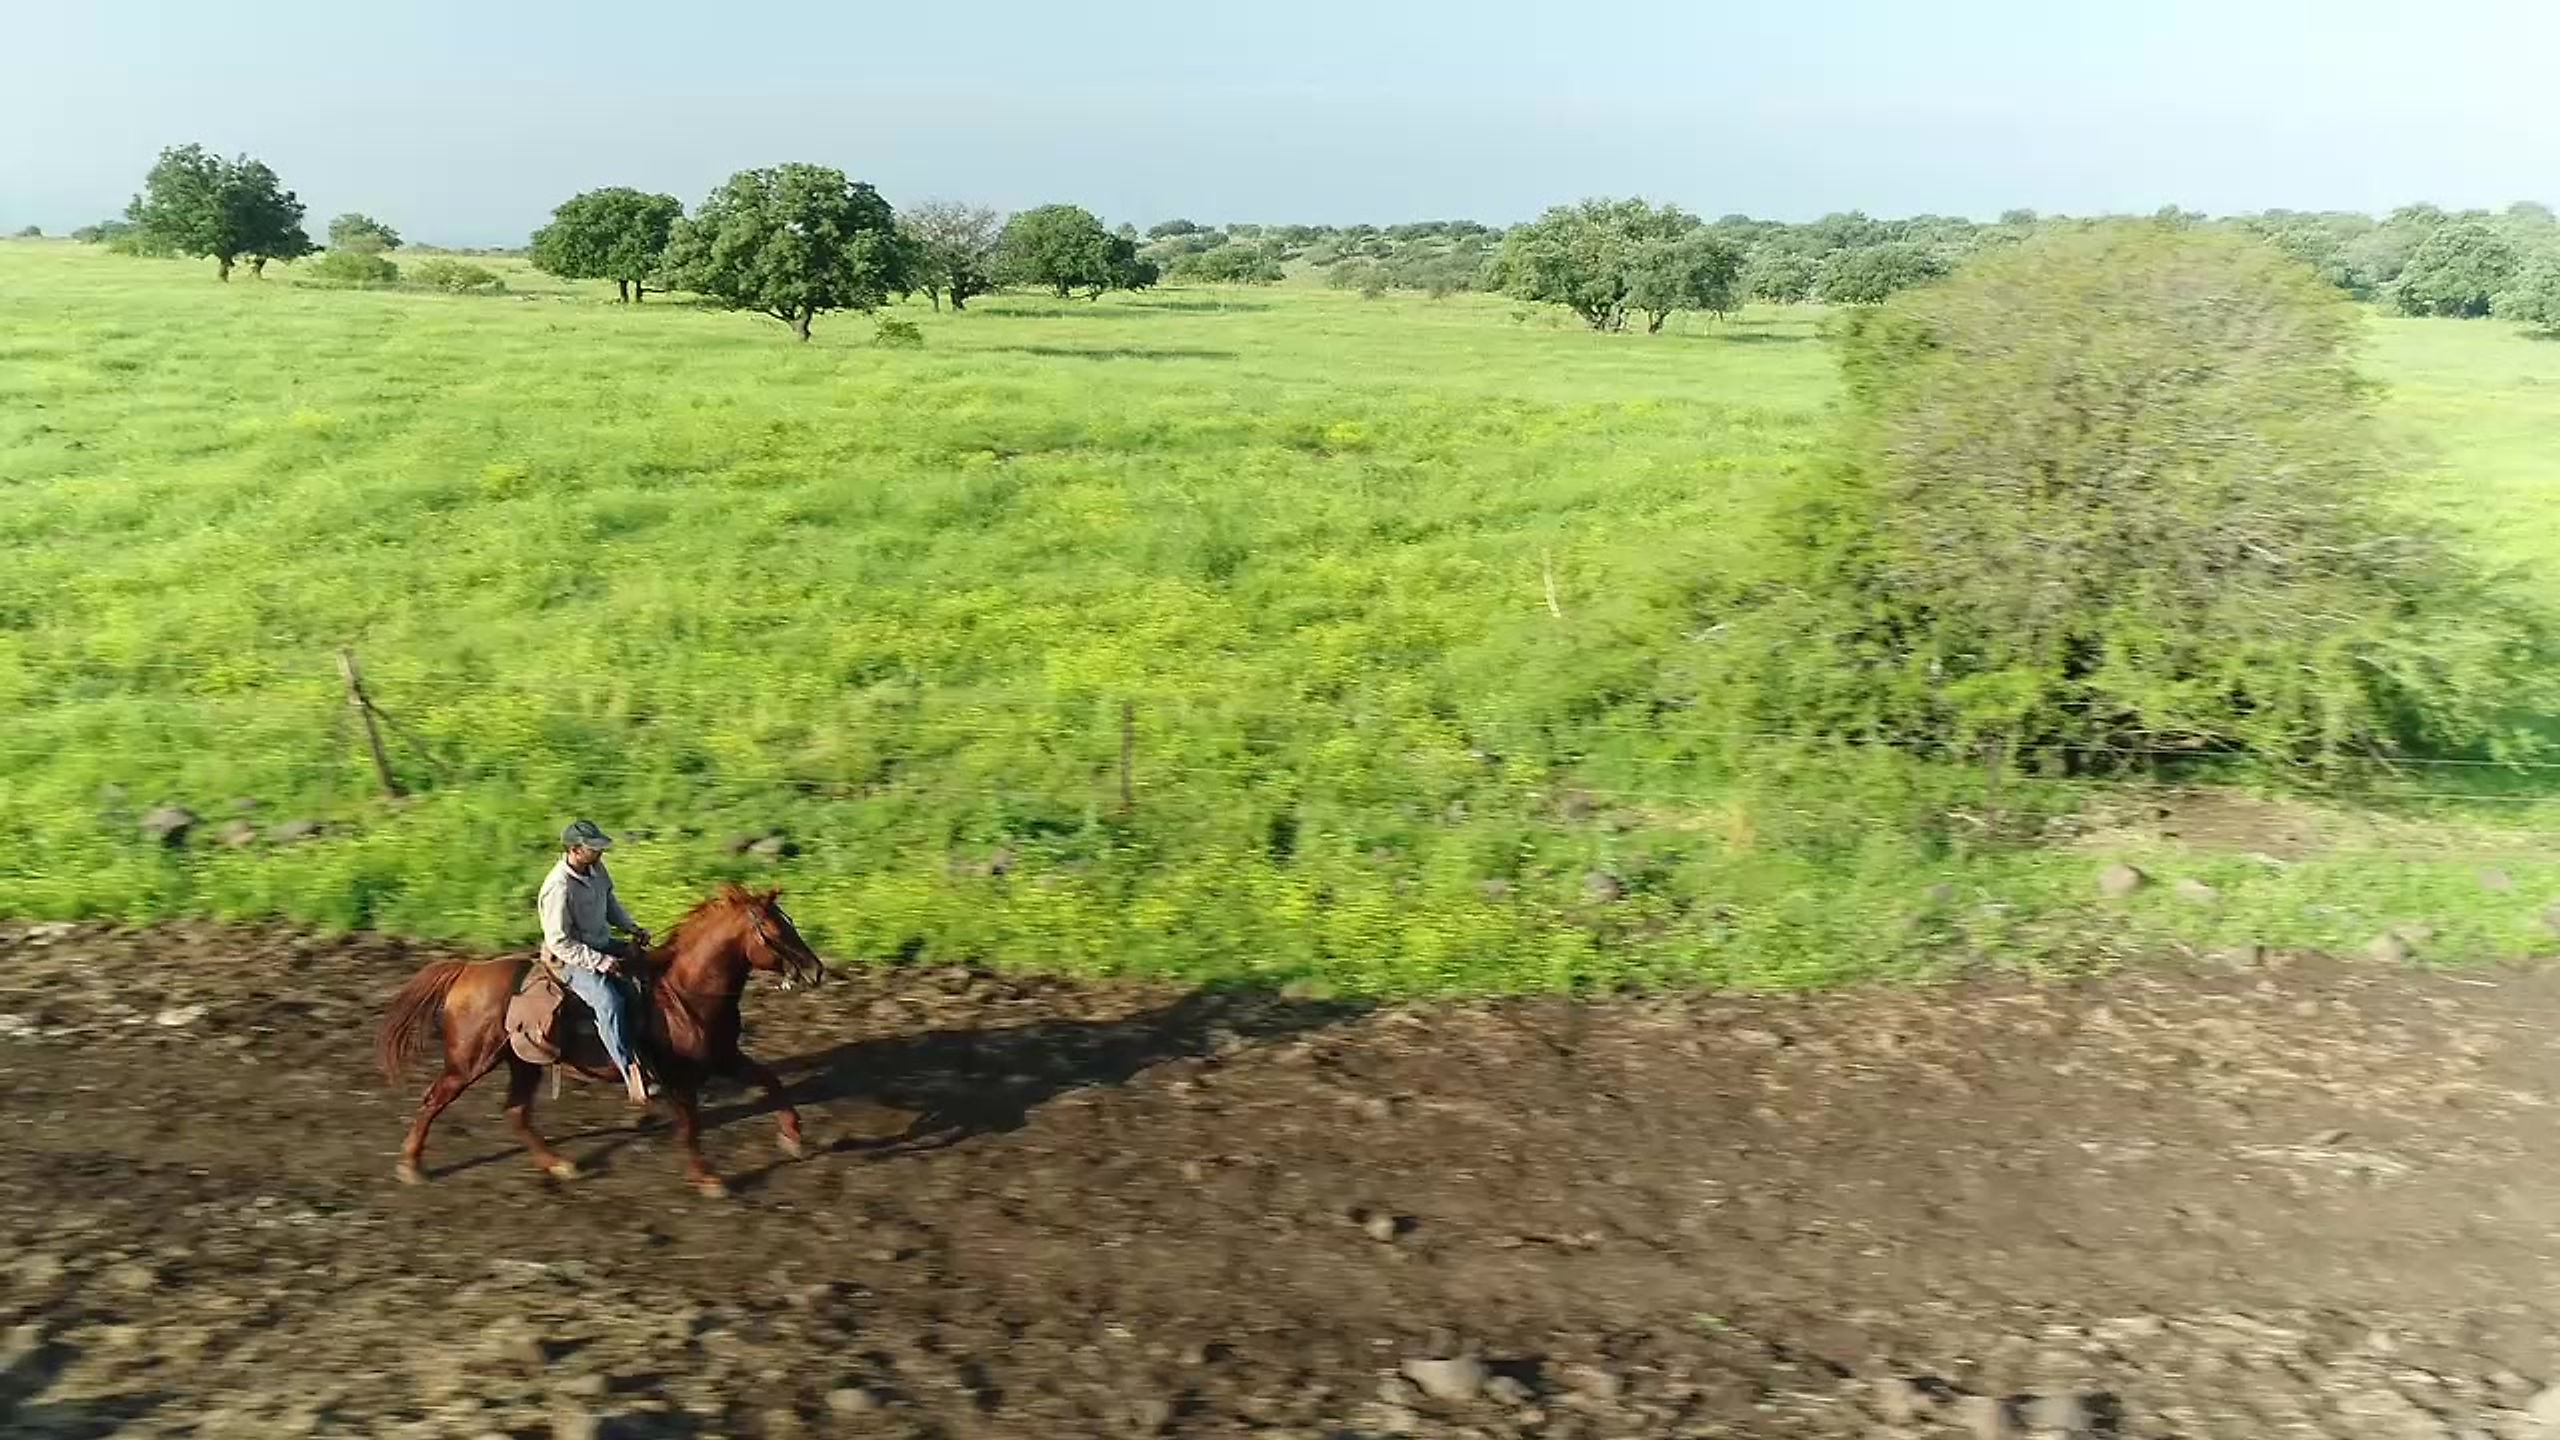 Runing Horse #2